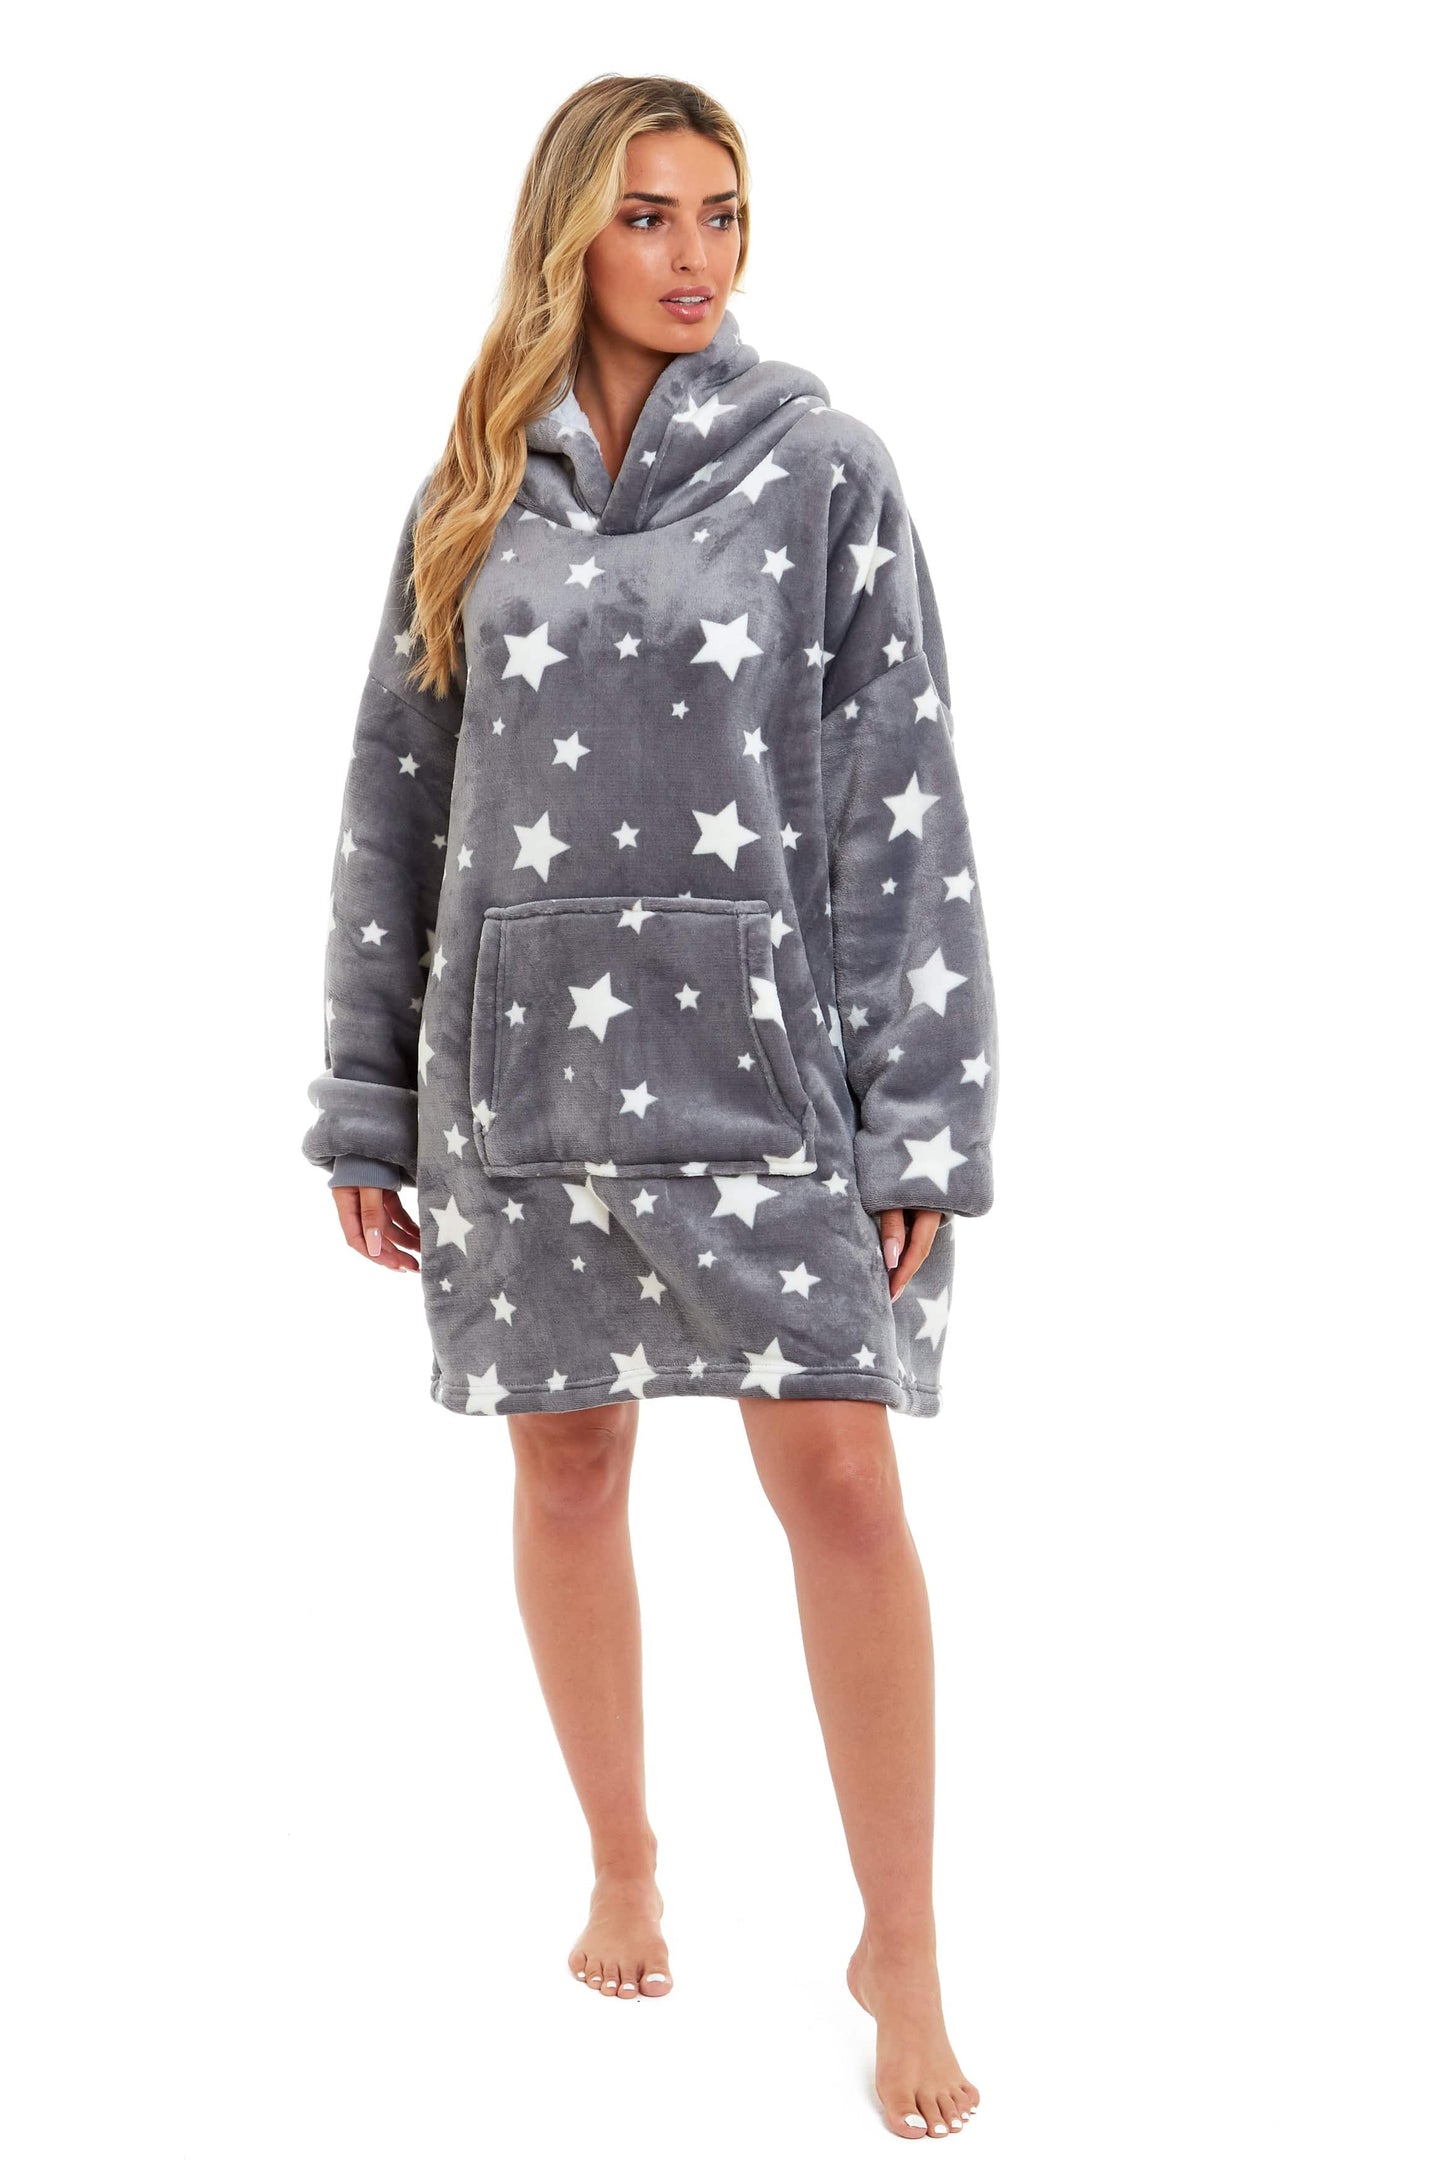 Oversized Grey Stars Hooded Plush Fleece With Reversible Sherpa Blanket. Buy now for £20.00. A Hooded Blanket by Daisy Dreamer. charcoal, clothing, flannel, fleece, grey, hooded blanket, kids, ladies, loungewear, nightwear, oodie, oversized top, plush, sh